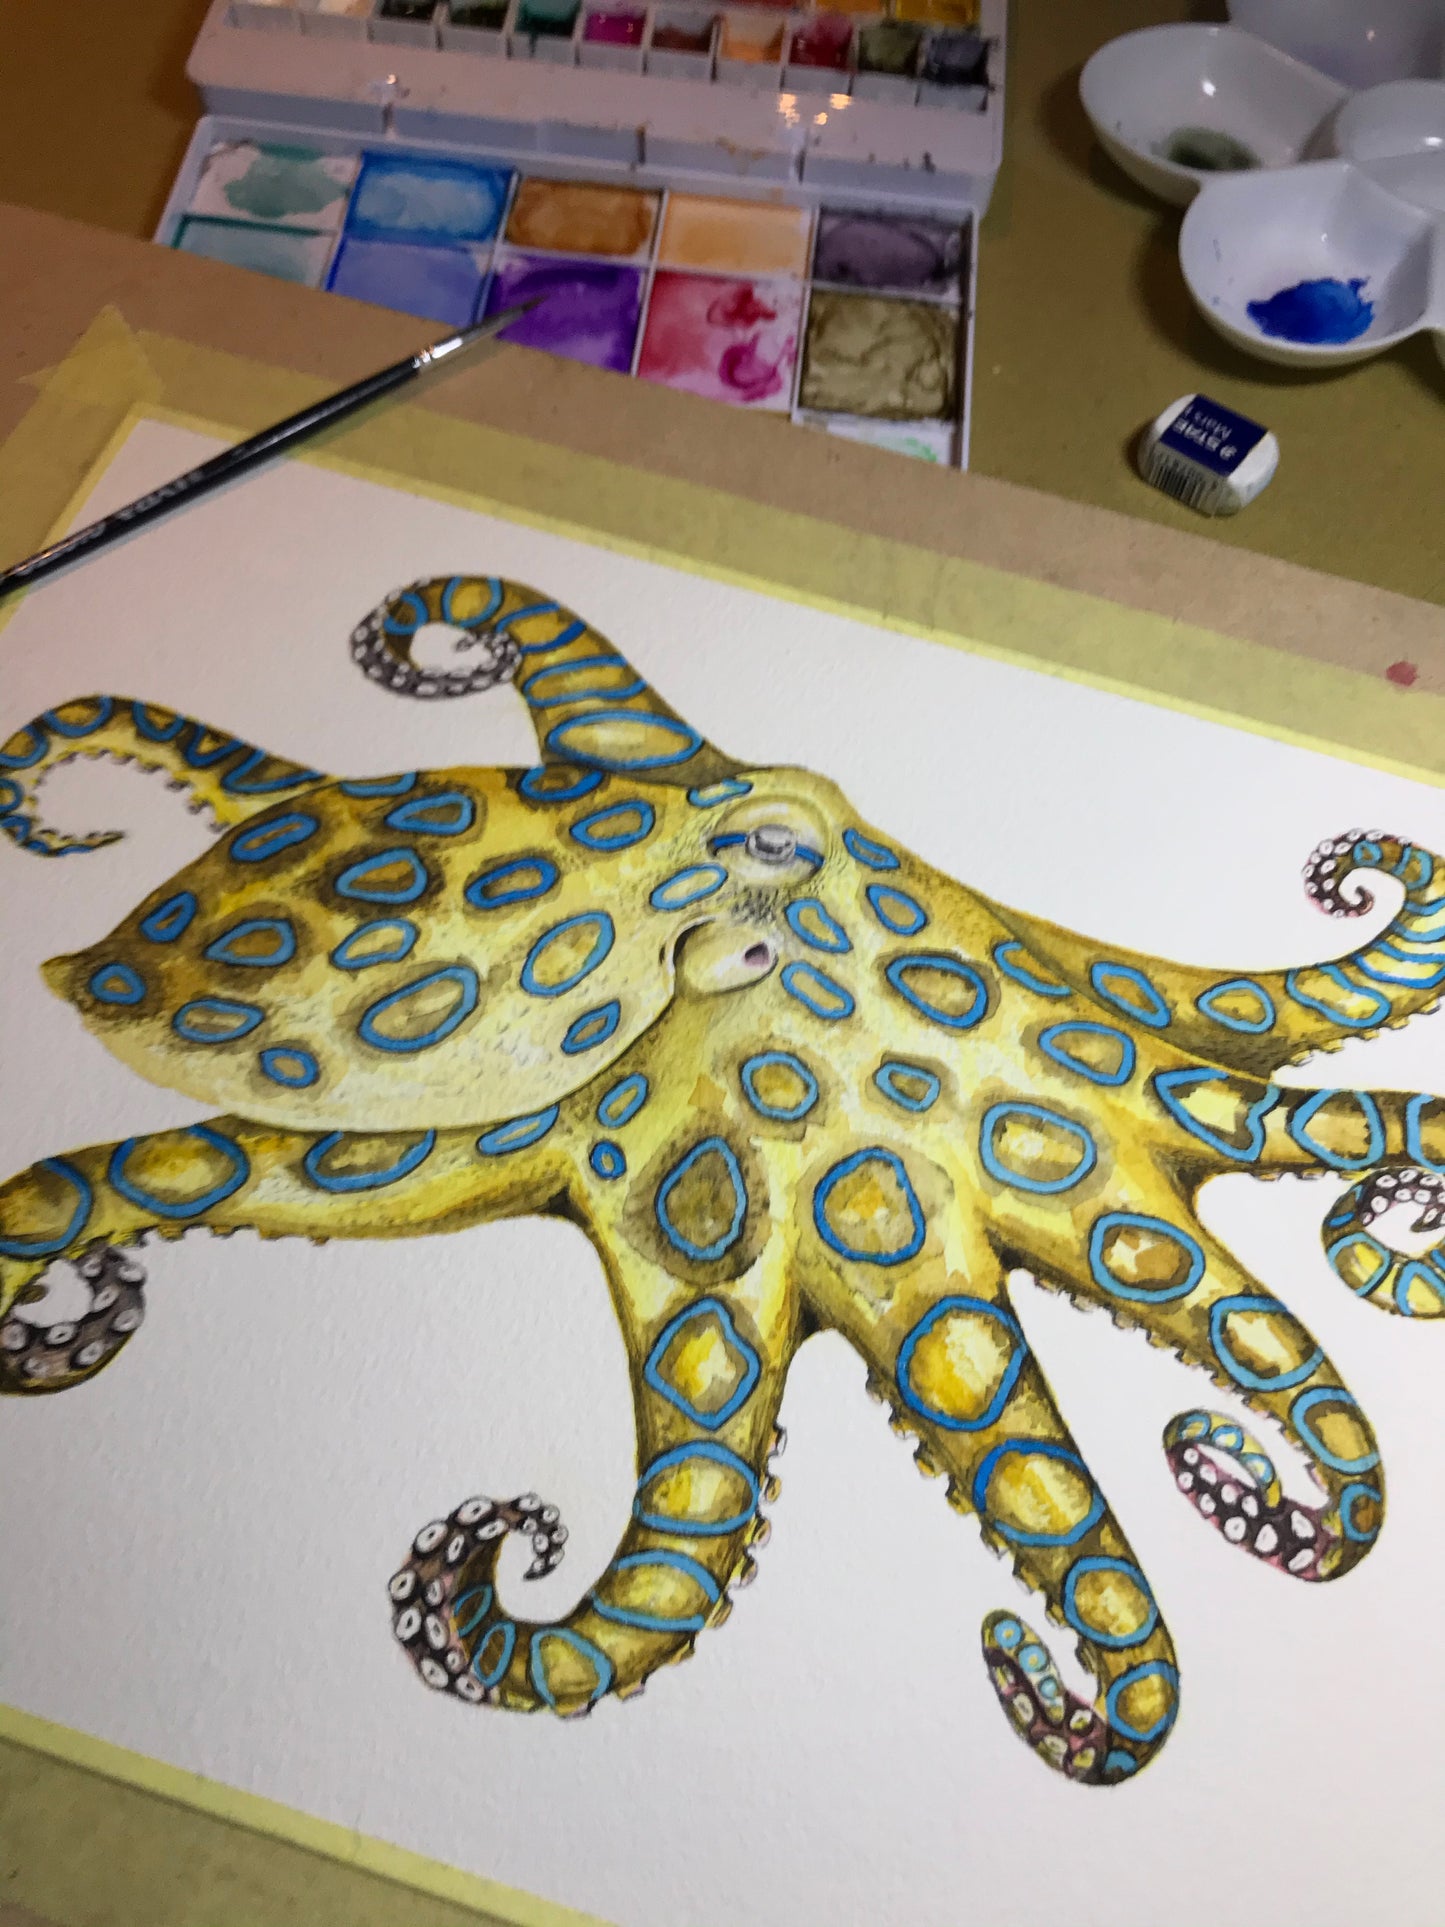 Giclee Fine-Art Print "Blue Ring Octopus"